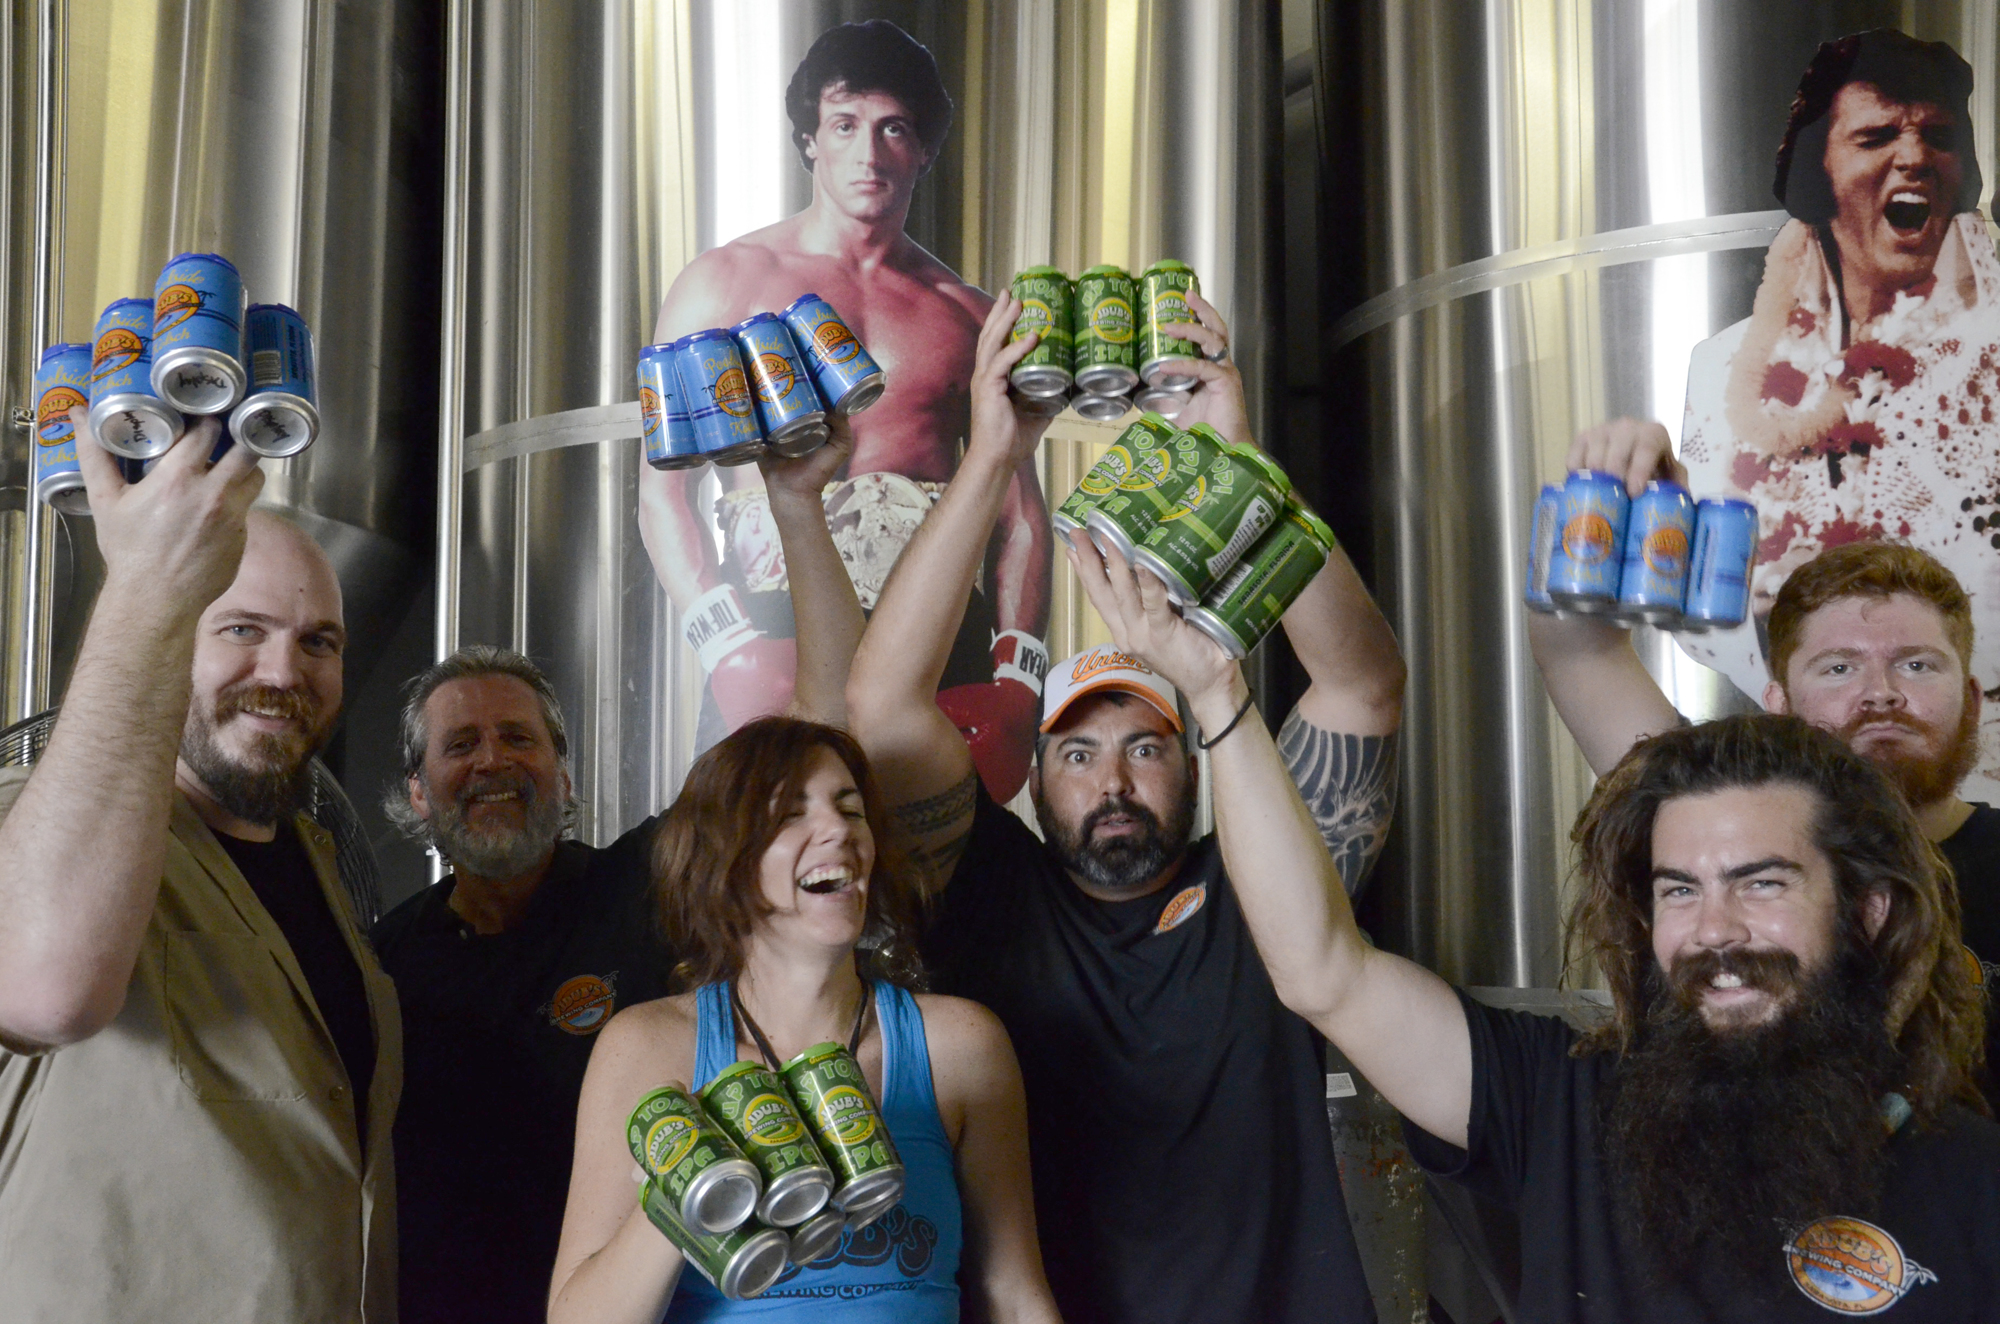 Dave Byrn, Raul Armengol, Jillian Ross, Jeremy Joerger, Evan Ekasala and Chris Lexow show off six-packs of Poolside Kolsch Aleand Up Top! IPA at JDub’s Brewing Co.